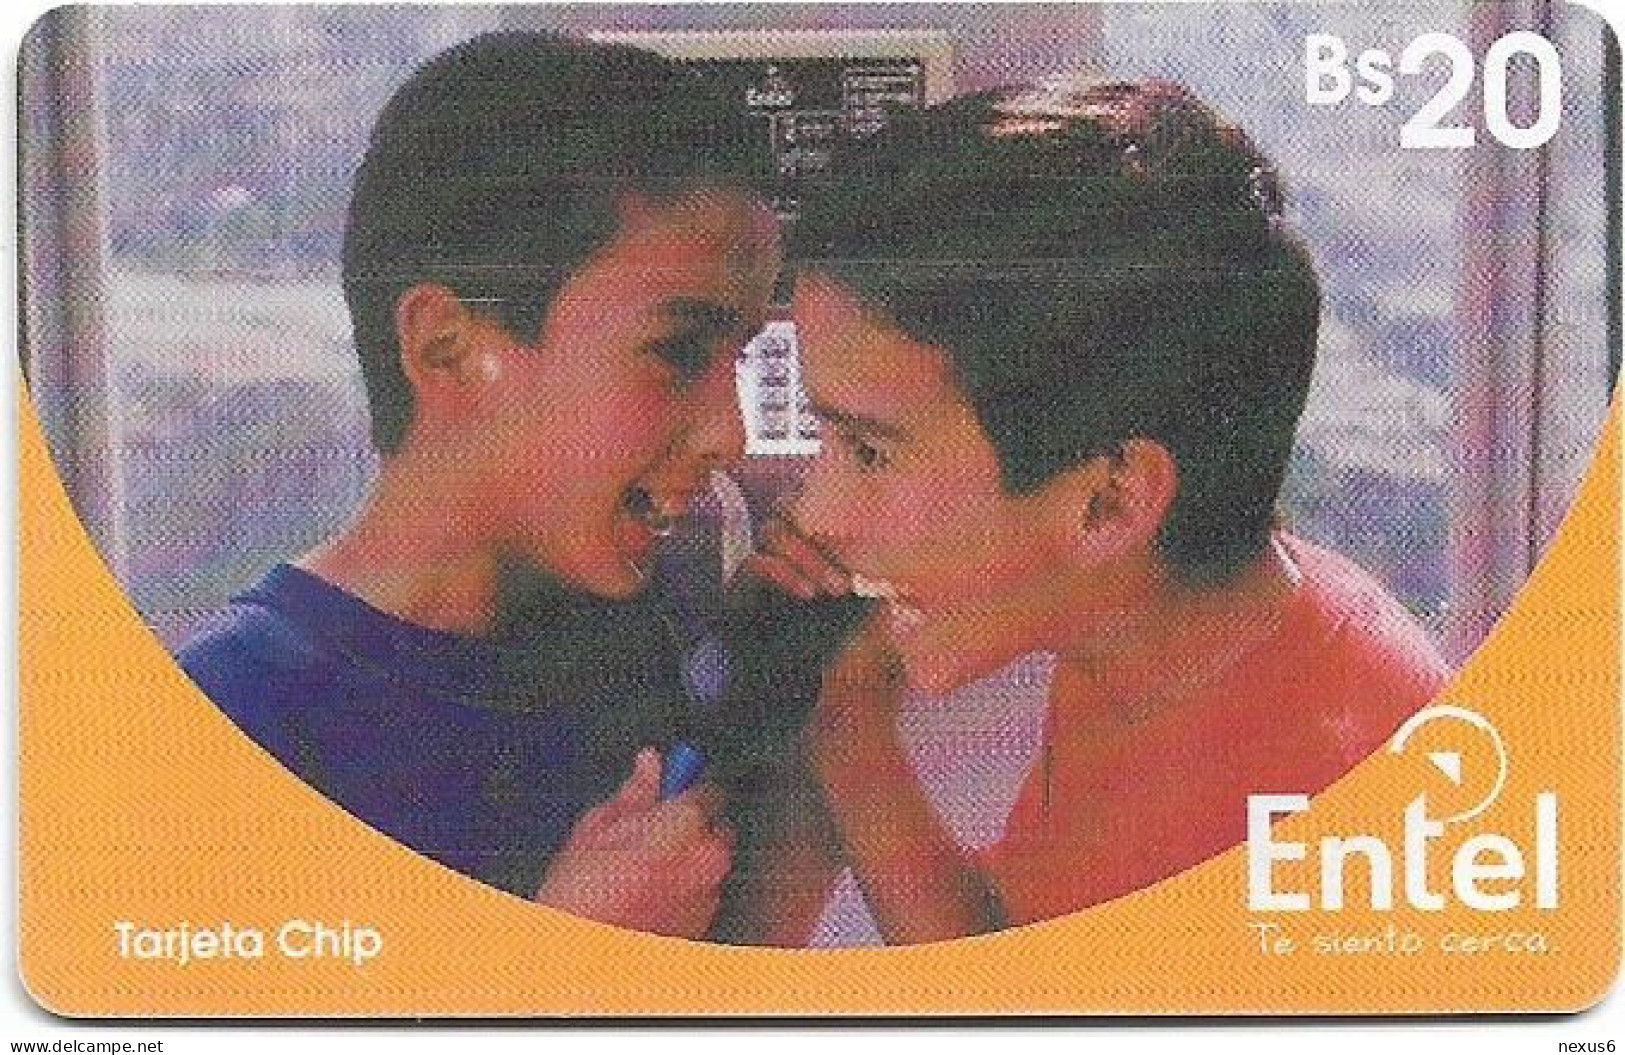 Bolivia - Entel (Chip) - Niños Al Teléfono (Type 2), Gem5 Red, 2002, 20Bs, Used - Bolivie